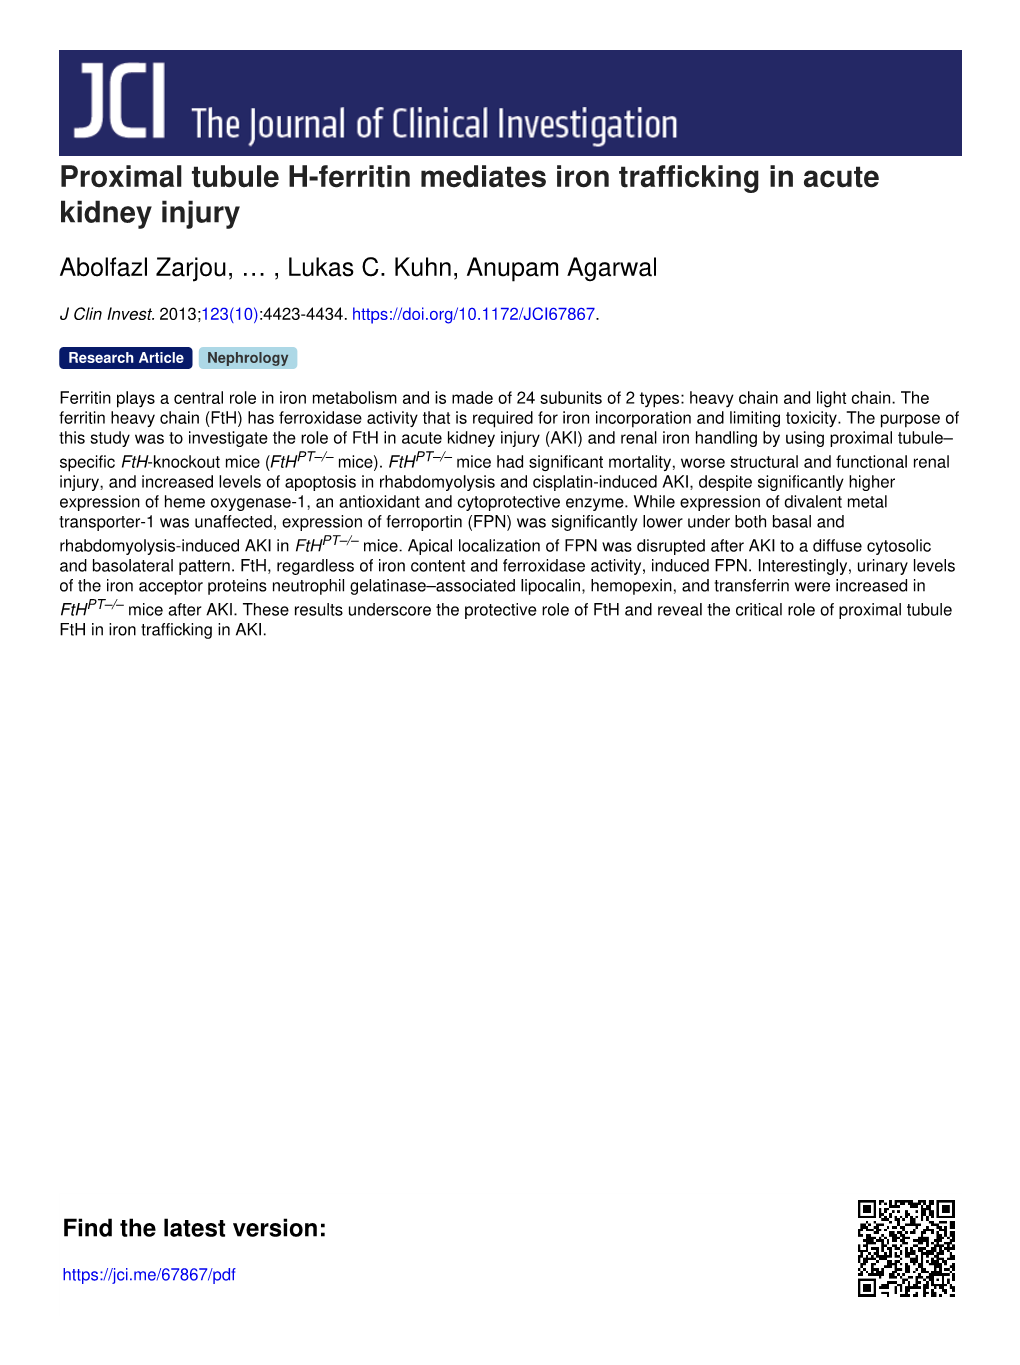 Proximal Tubule H-Ferritin Mediates Iron Trafficking in Acute Kidney Injury